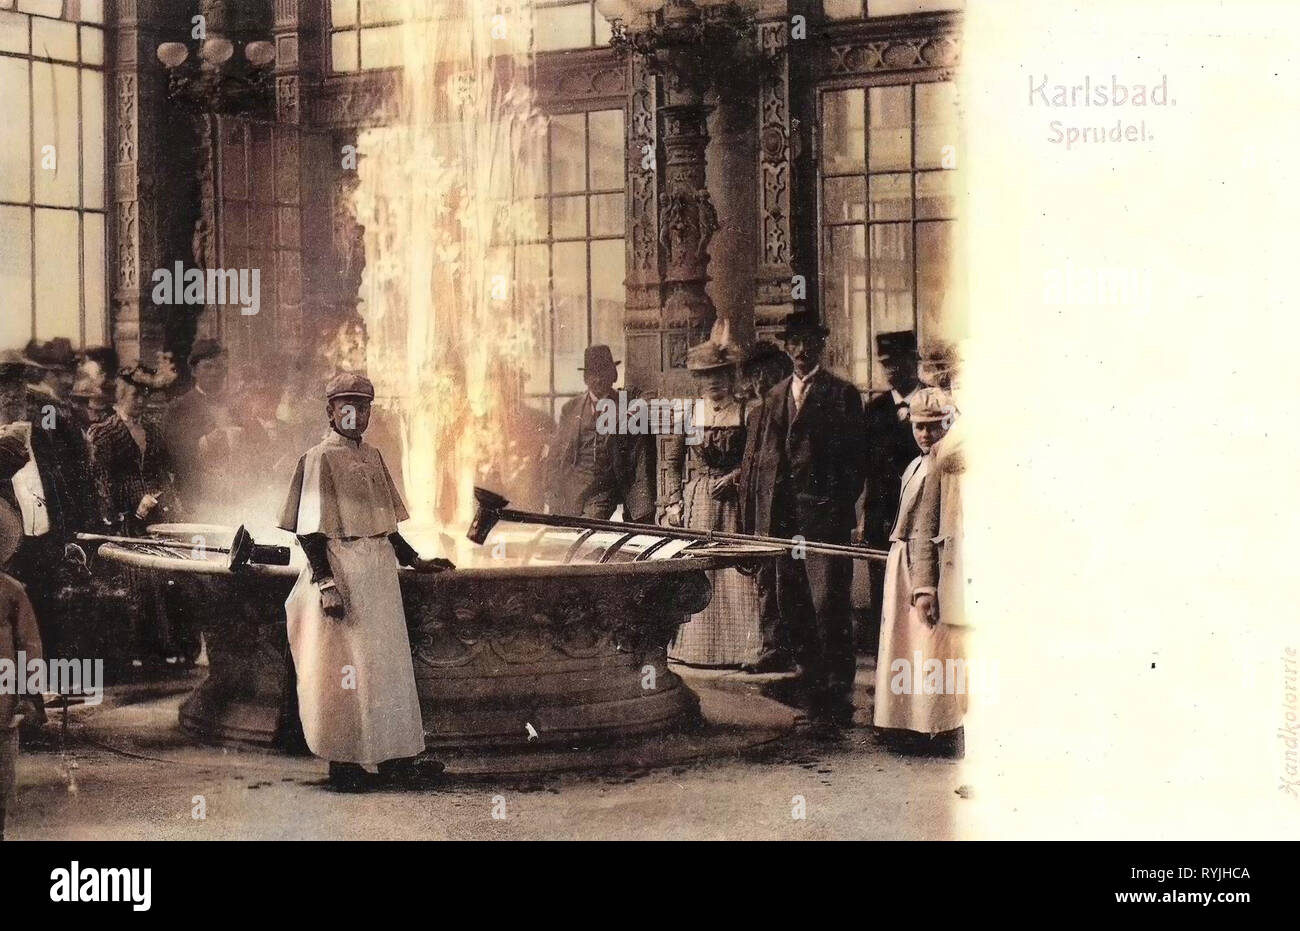 Vřídlo (Karlovy Vary), 1898, Regione di Karlovy Vary, Karlsbad, Sprudel, Repubblica Ceca Foto Stock